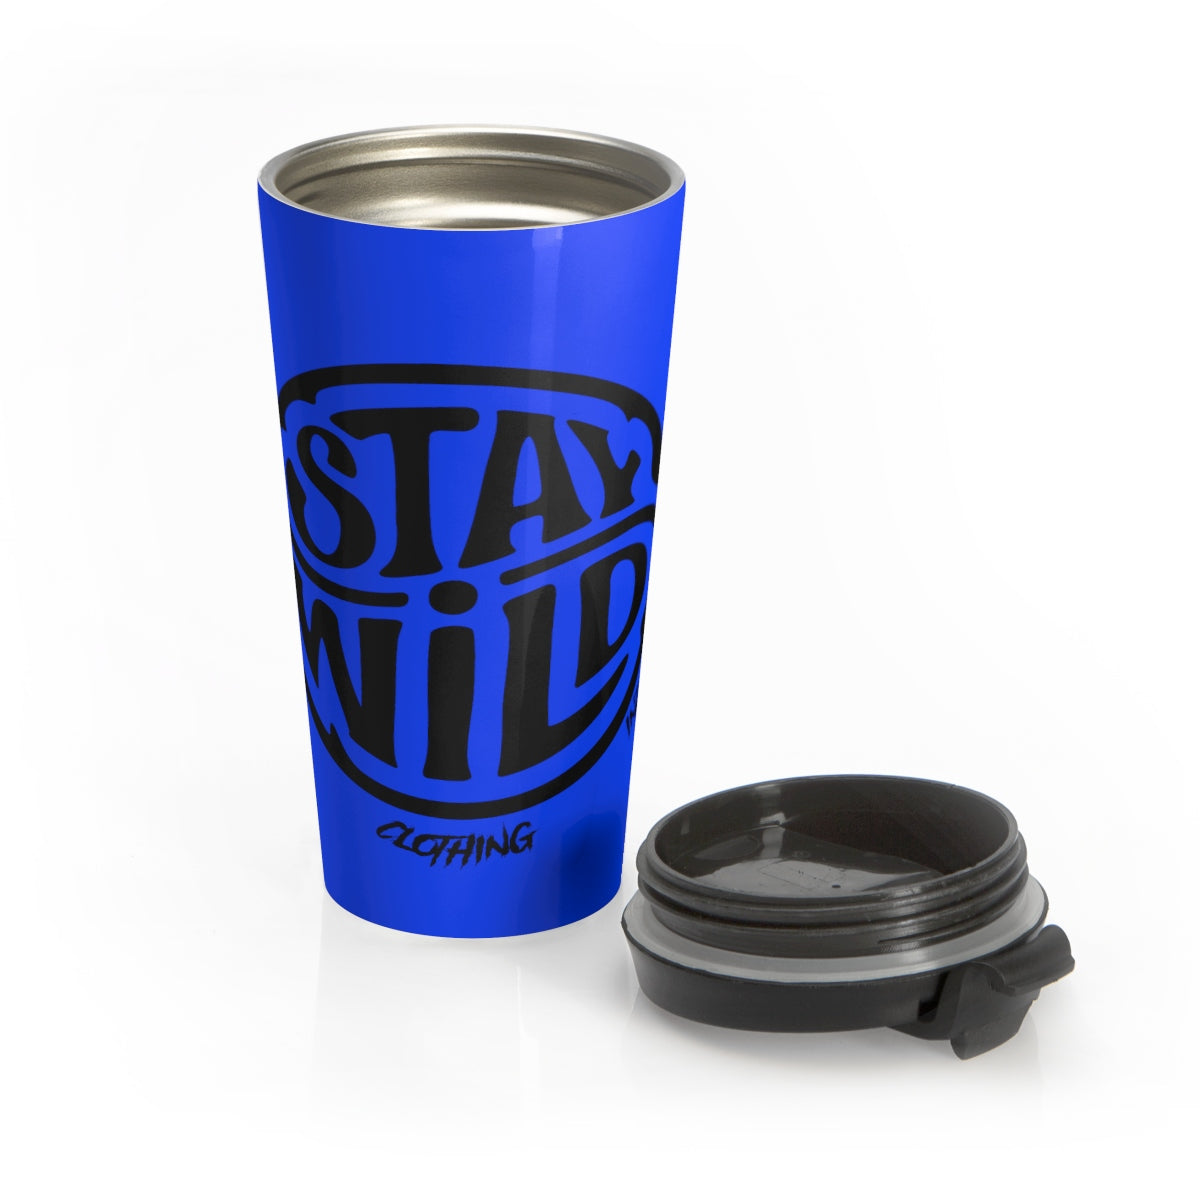 Stay Wild Black N Blue/Stainless Steel Travel Mug